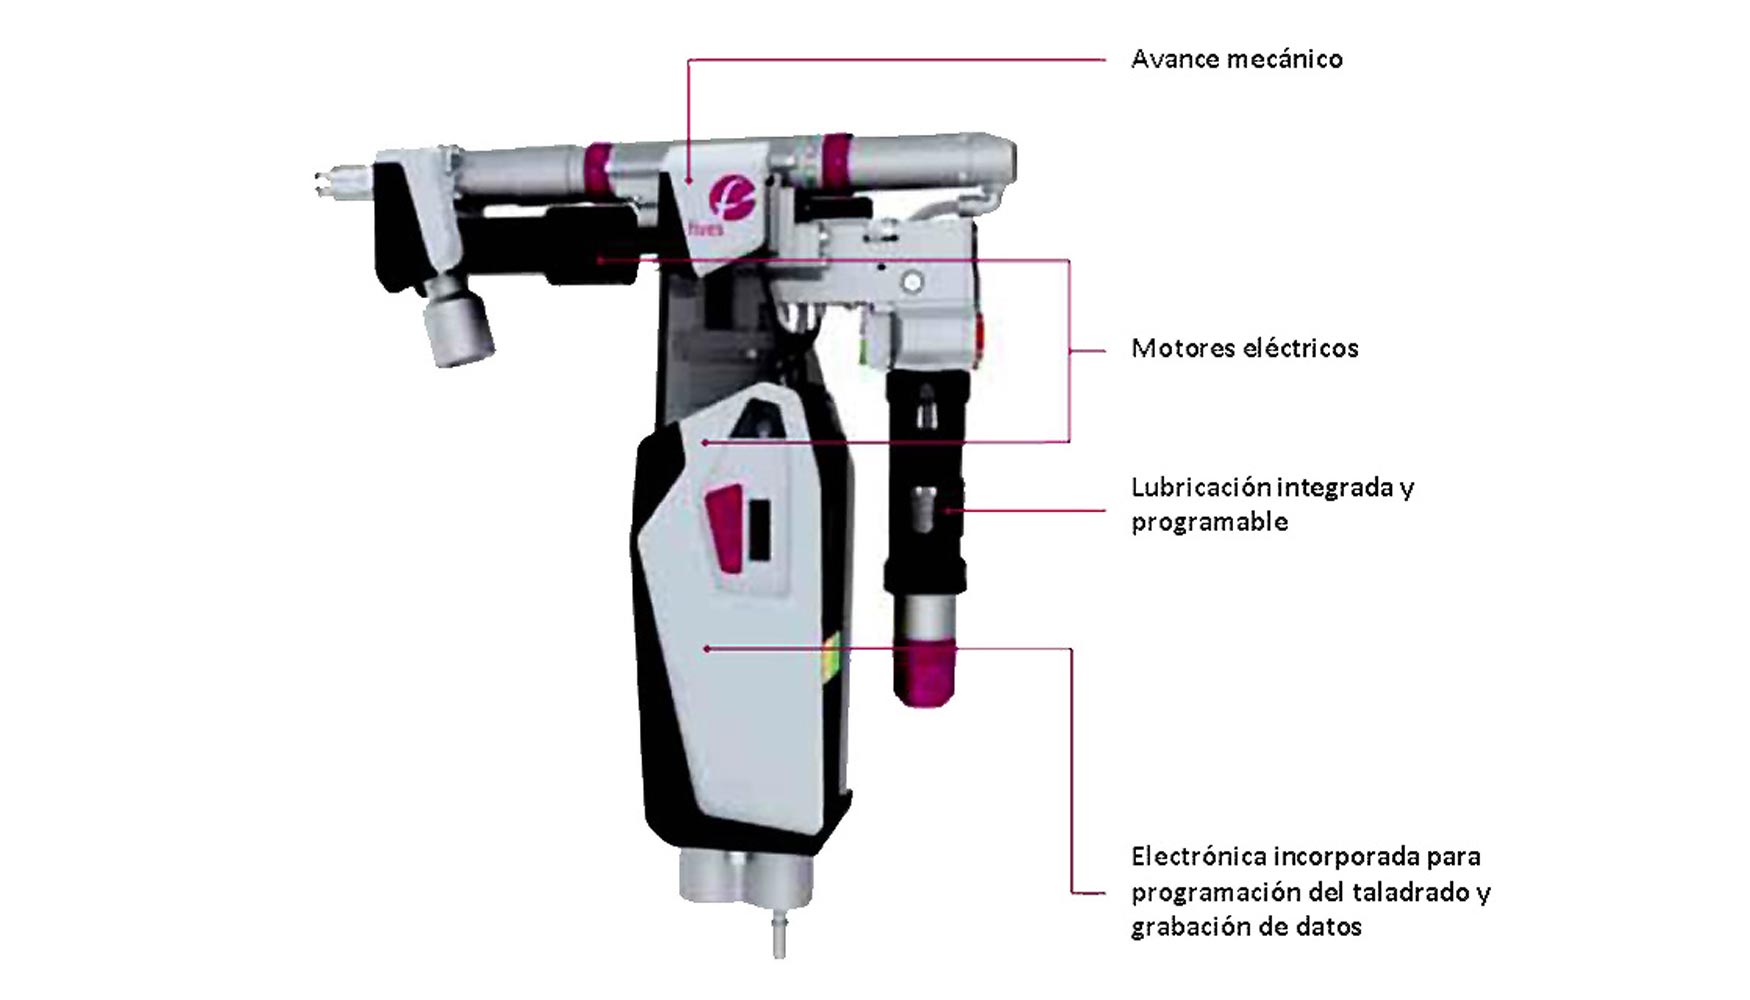 Figura 12. Modelo eADU enhanced Automated Drilling Unit de FIVES [11]